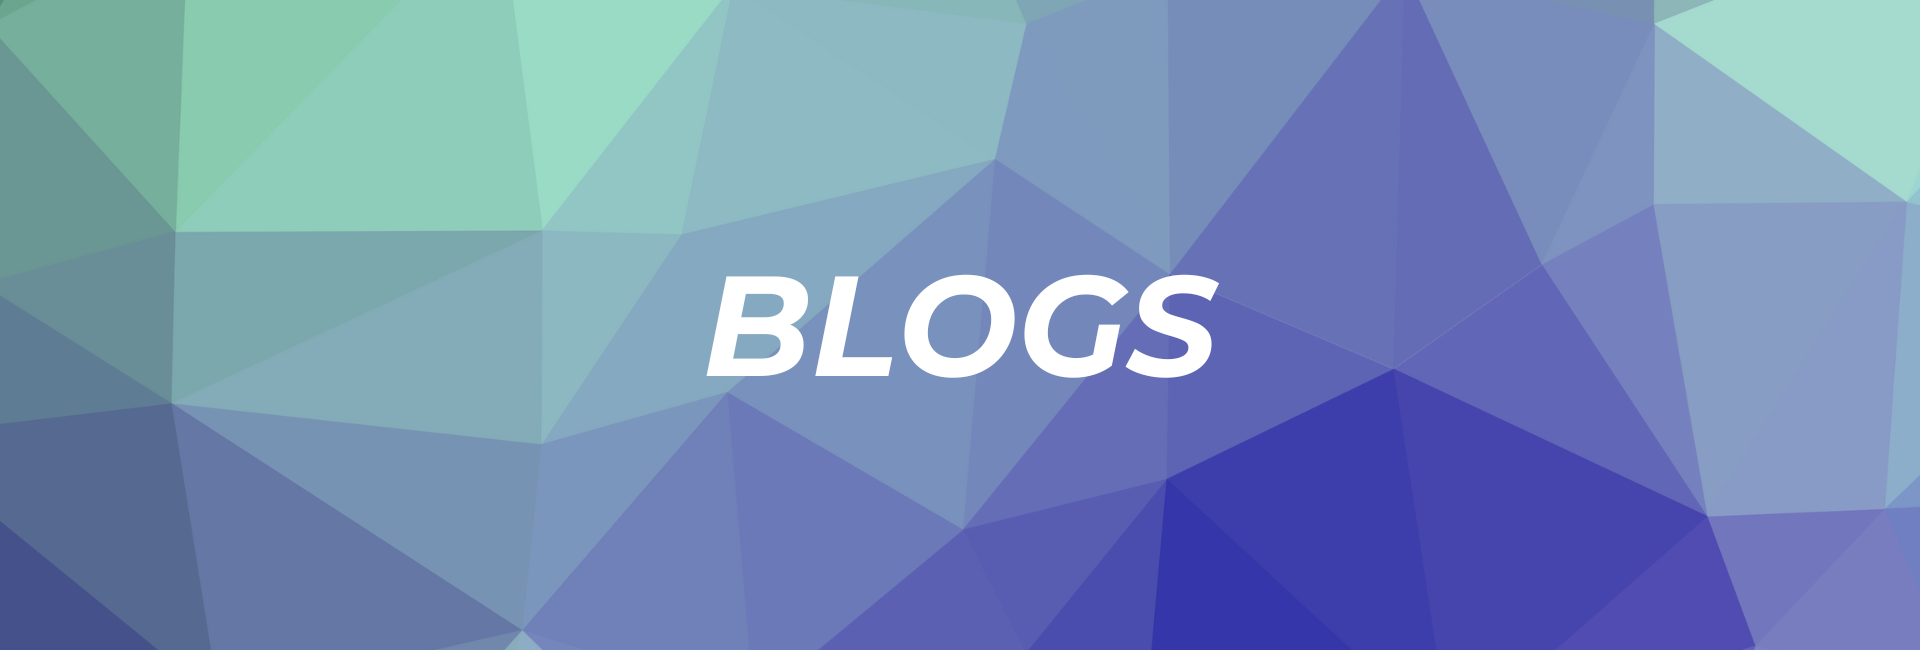 blogs-banner